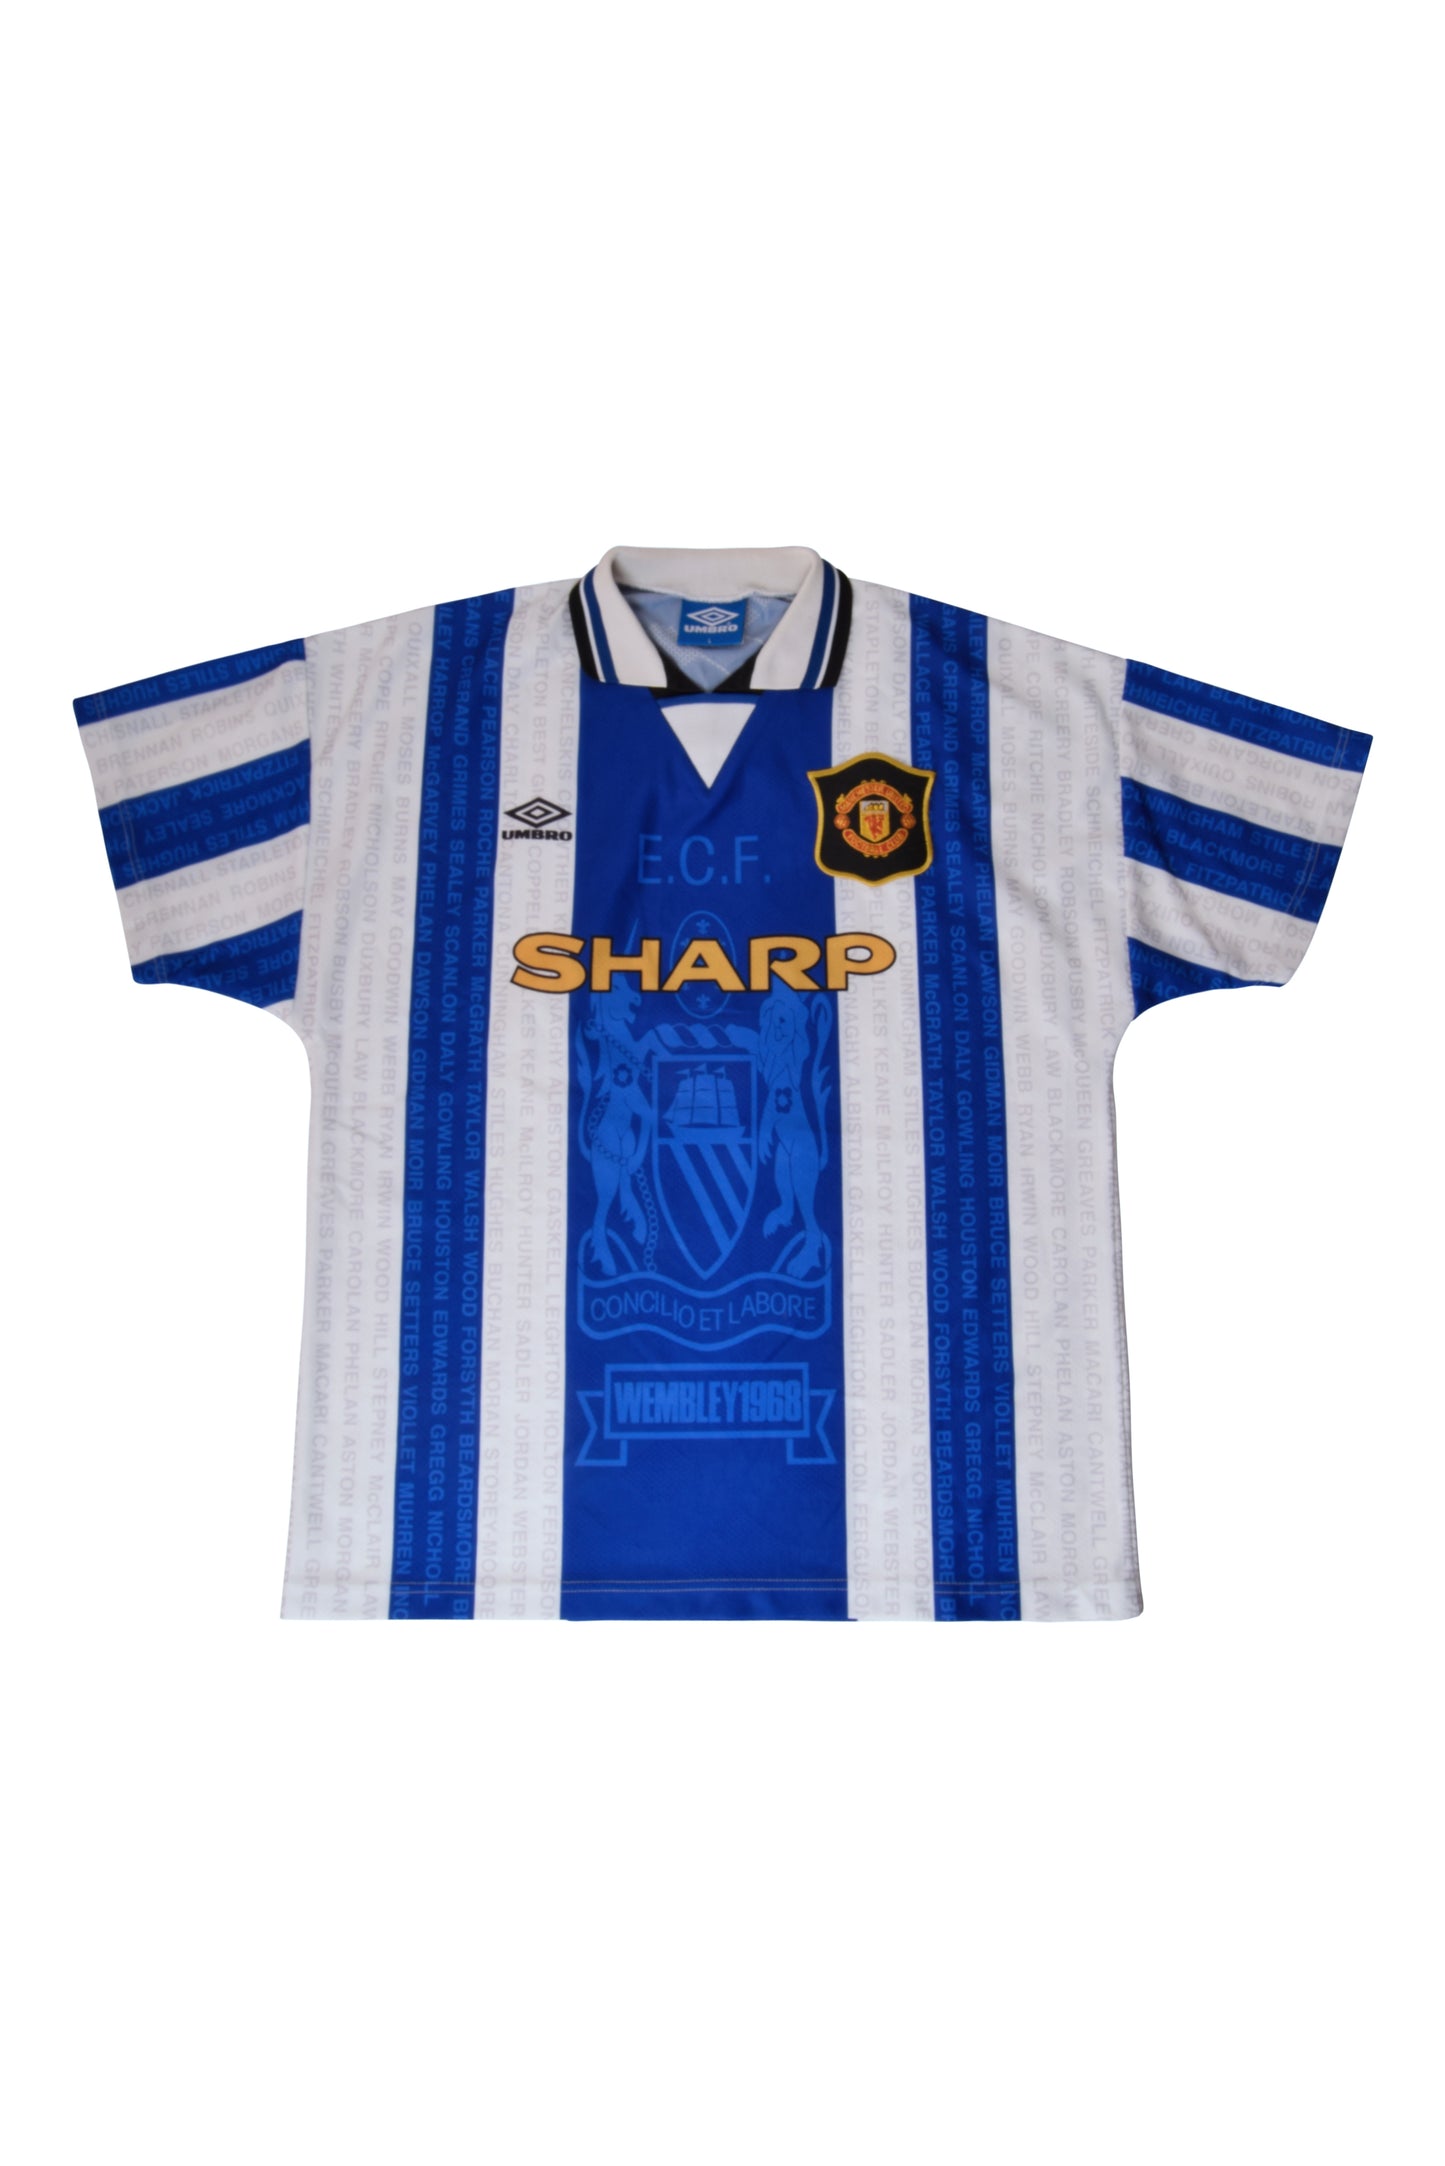 Vintage Manchester United 1994-1996 Umbro Away 3rd Football Shirt Sharp White Blue Size L